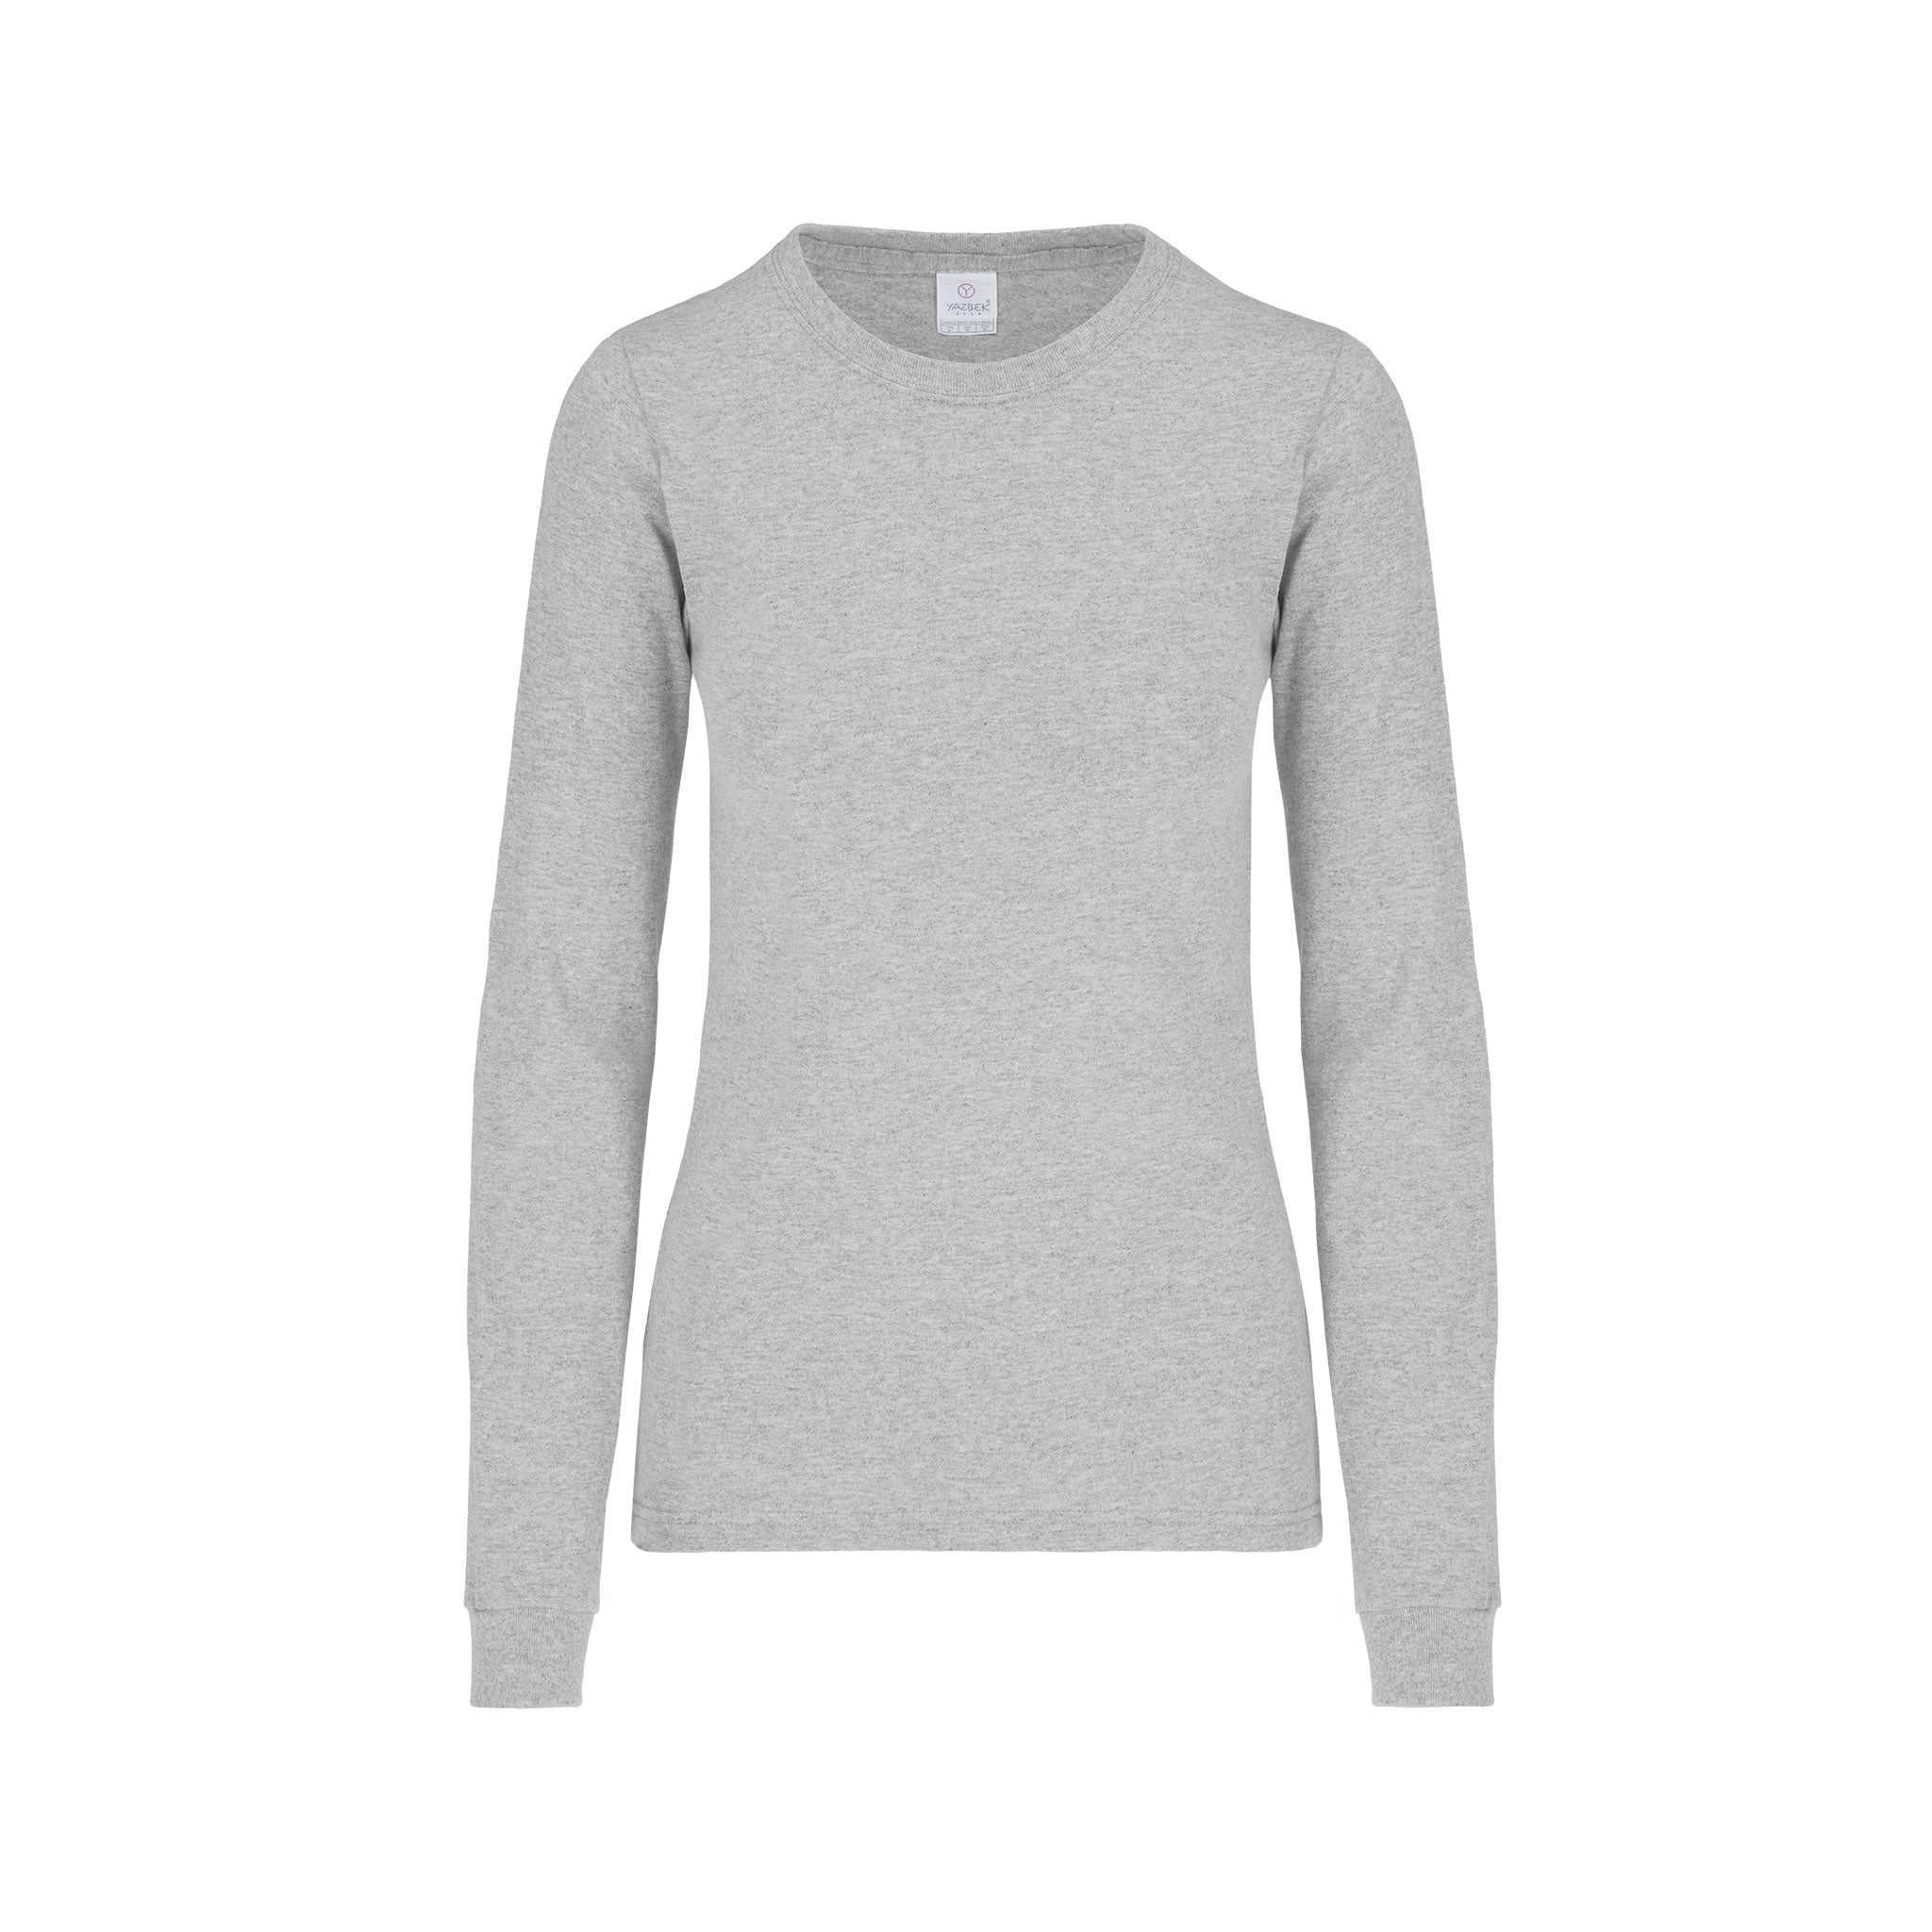 Long printed T-shirt - Light grey marl/New York - Ladies